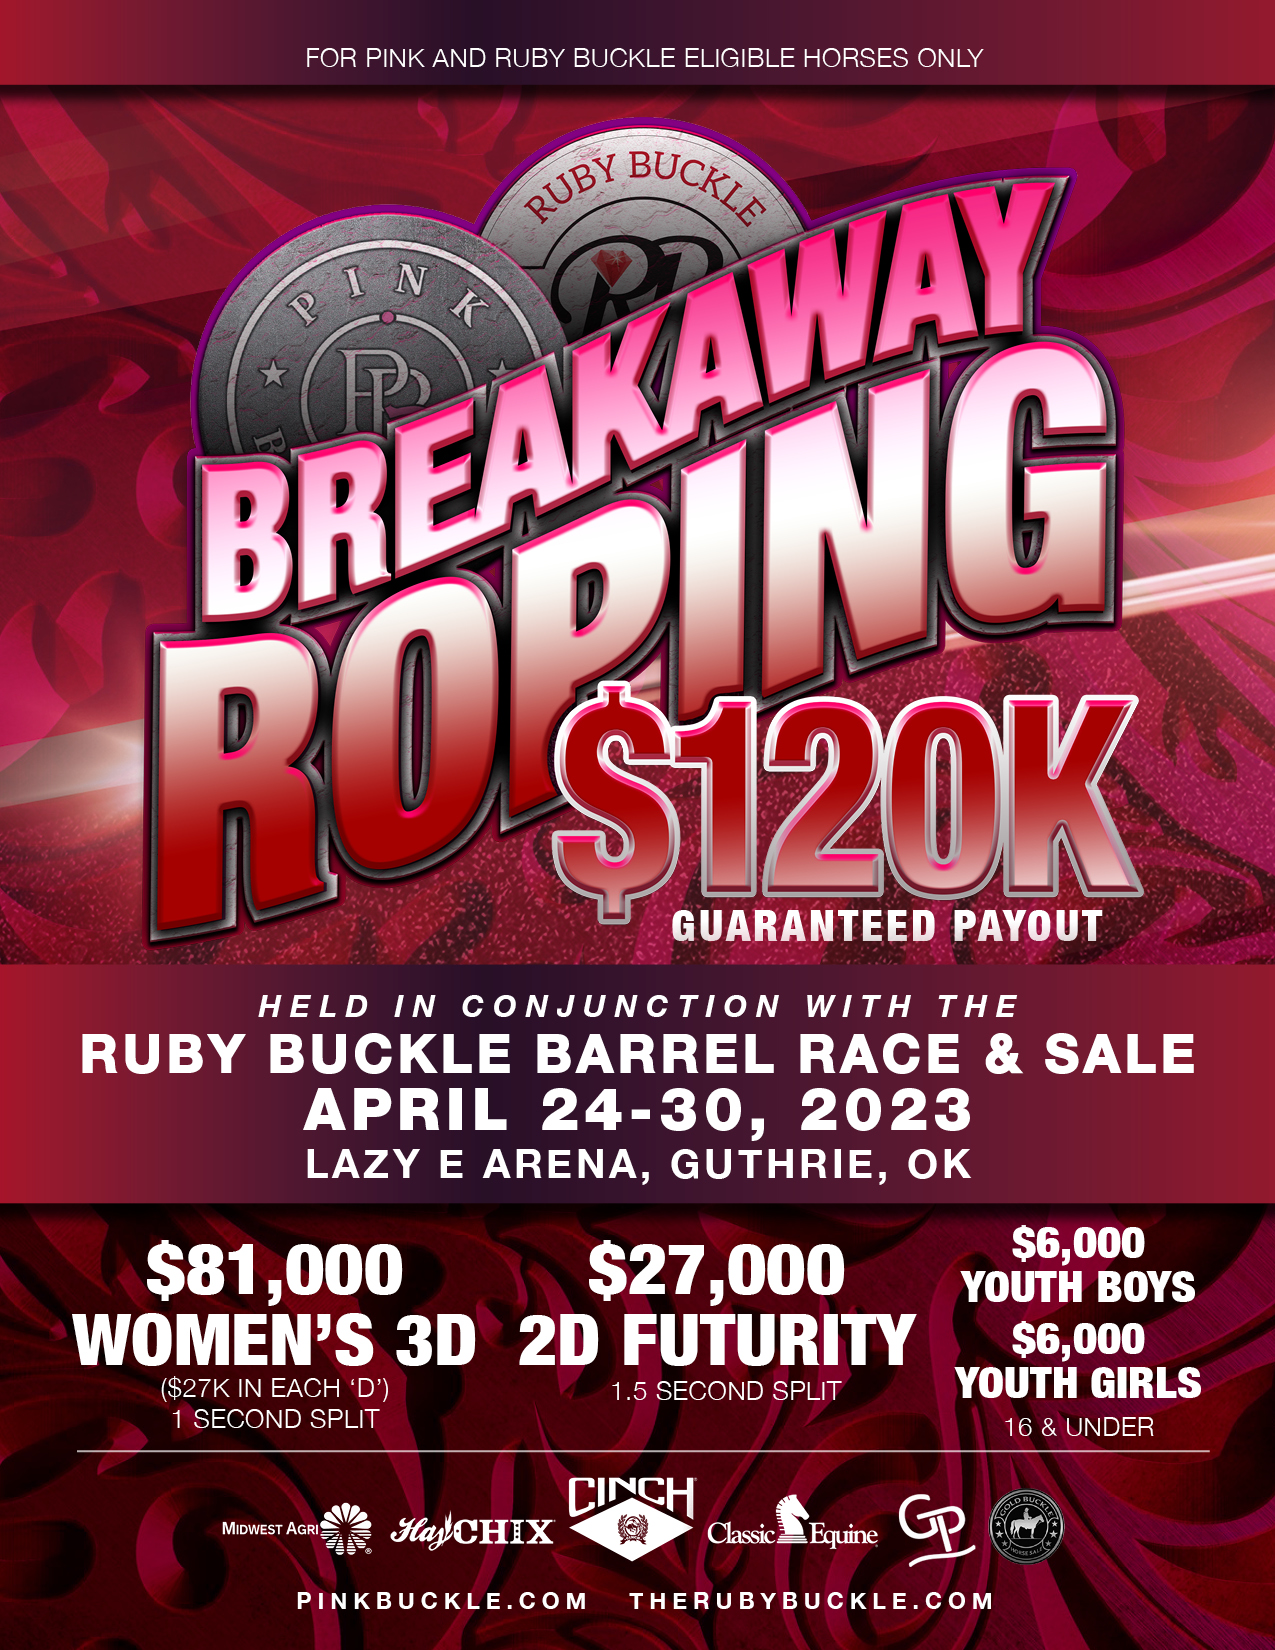 Pink Buckle Breakaway Rooping Guaranteed $120K Payout